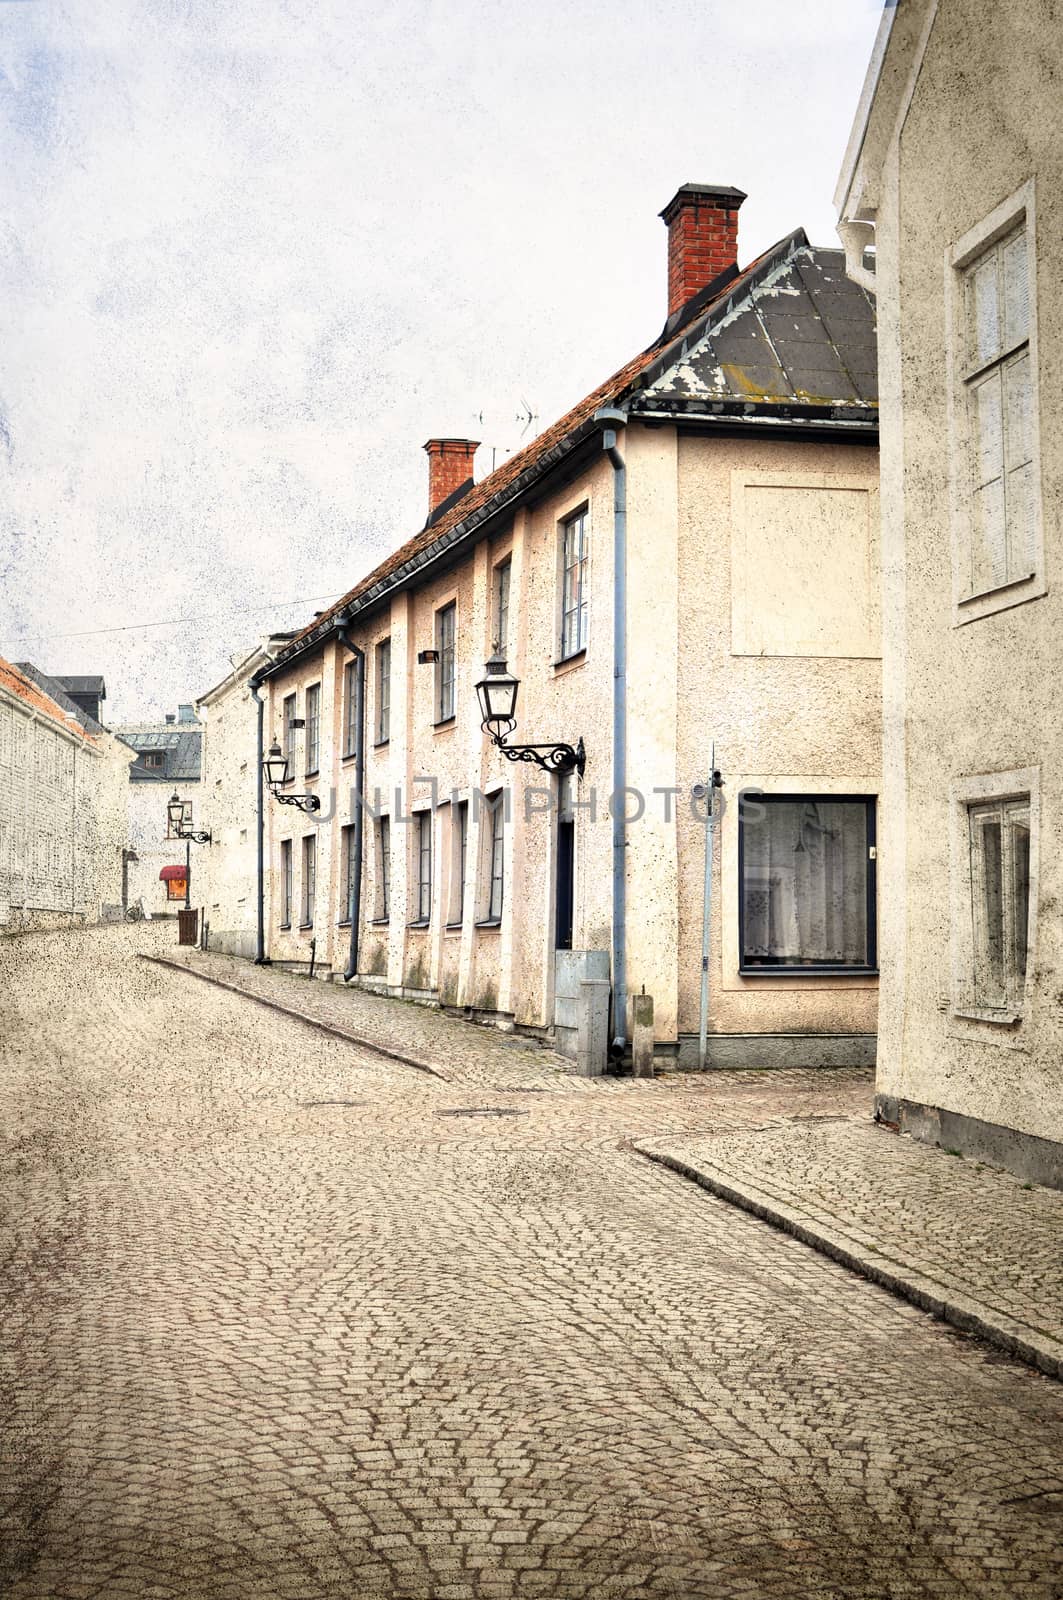 Picturesque small medivial street in Sweden.